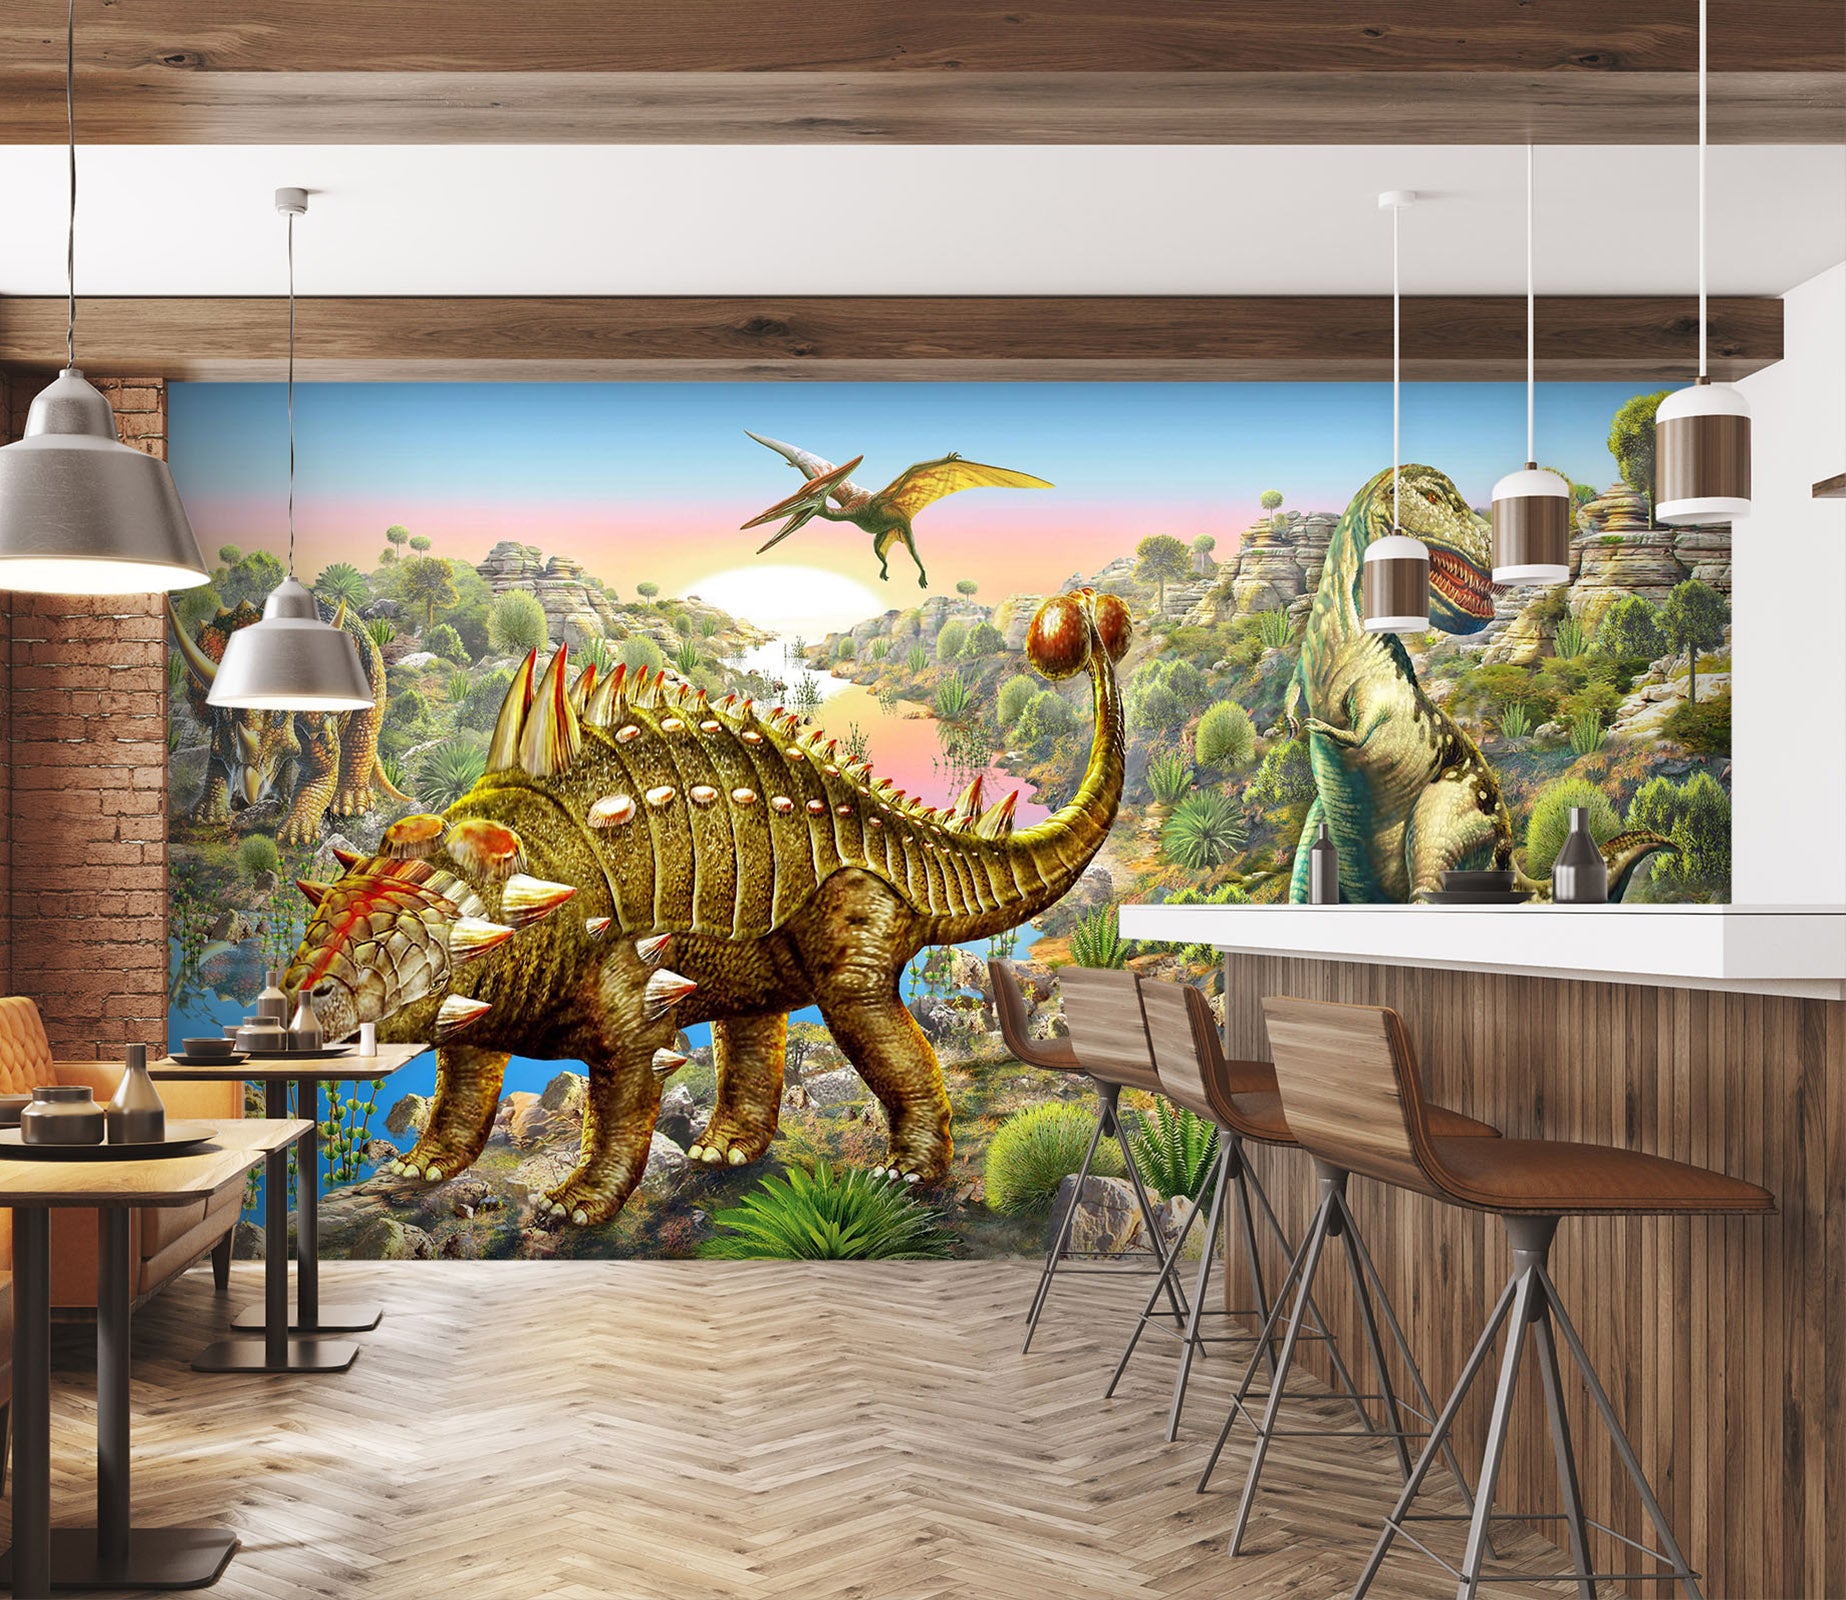 3D Dinosaur 1401 Adrian Chesterman Wall Mural Wall Murals